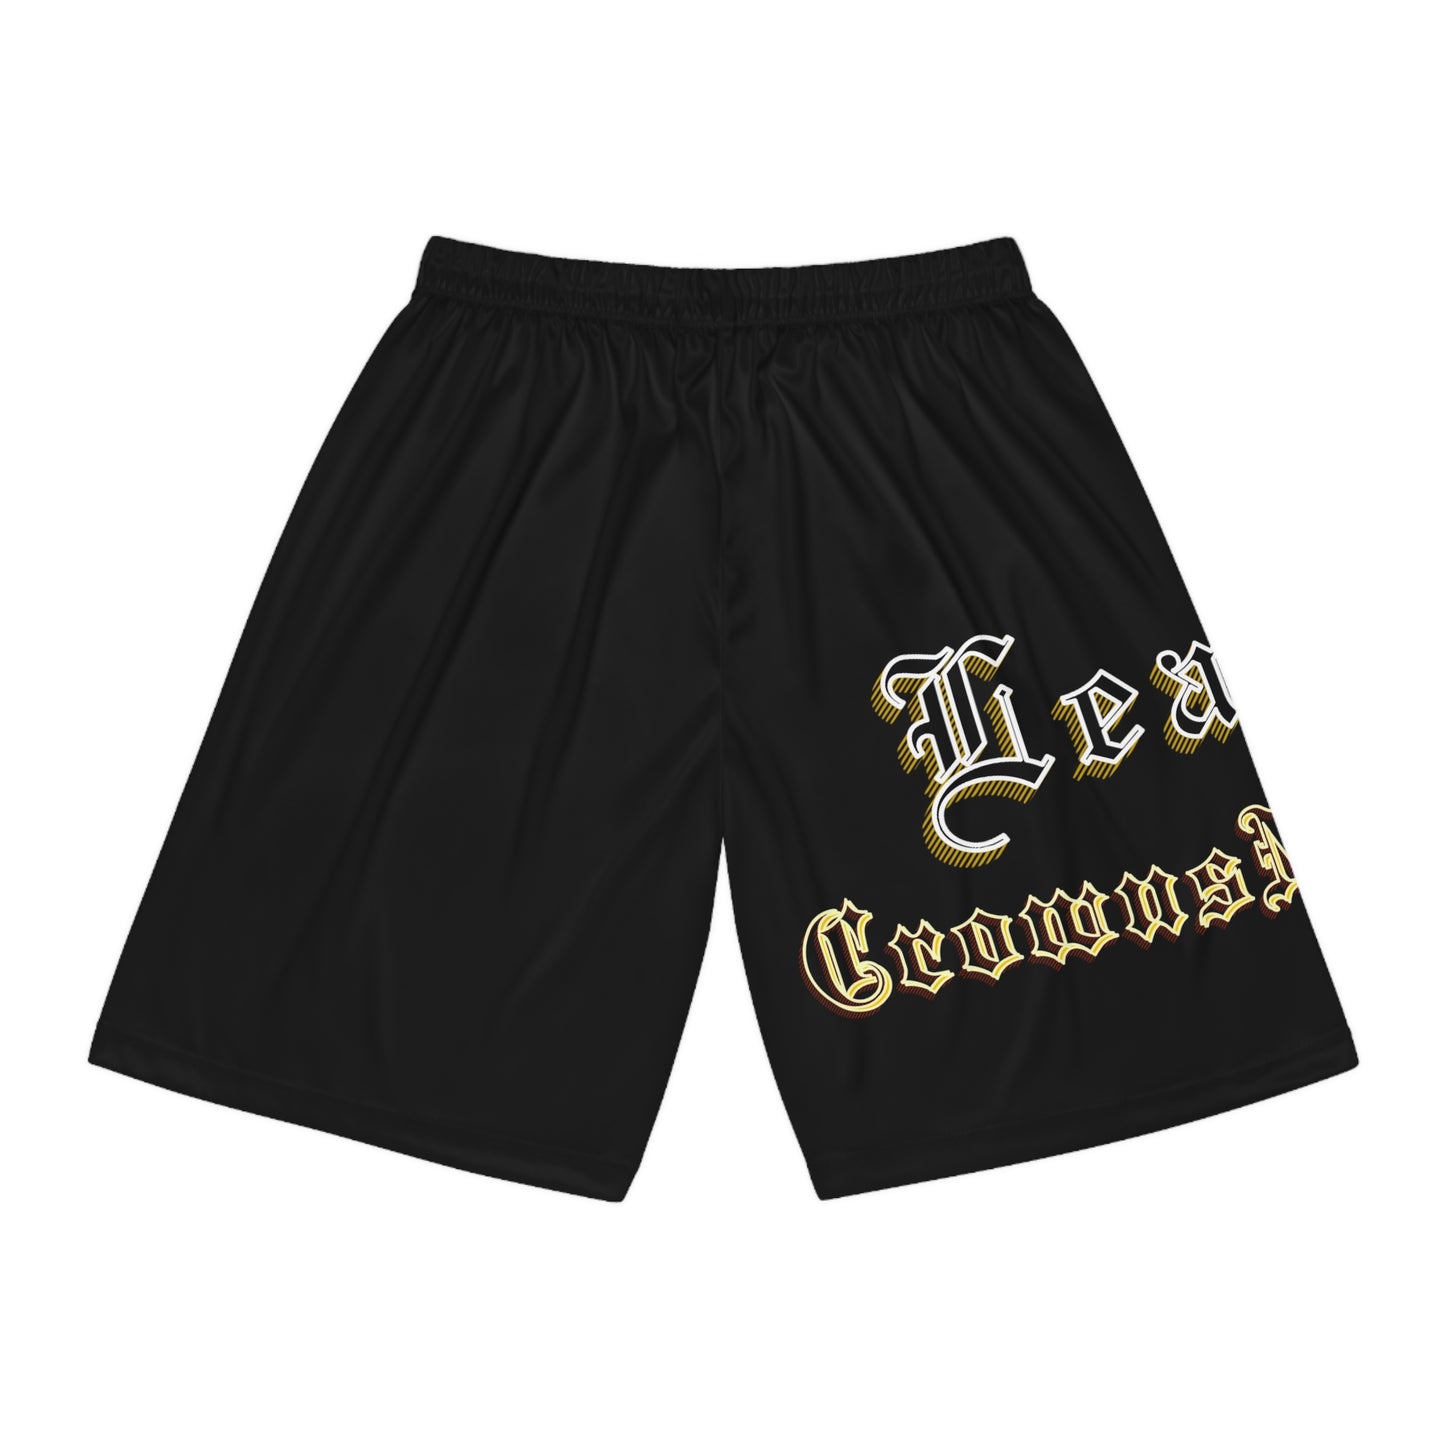 CrownsNPounds "Lealtad" shorts